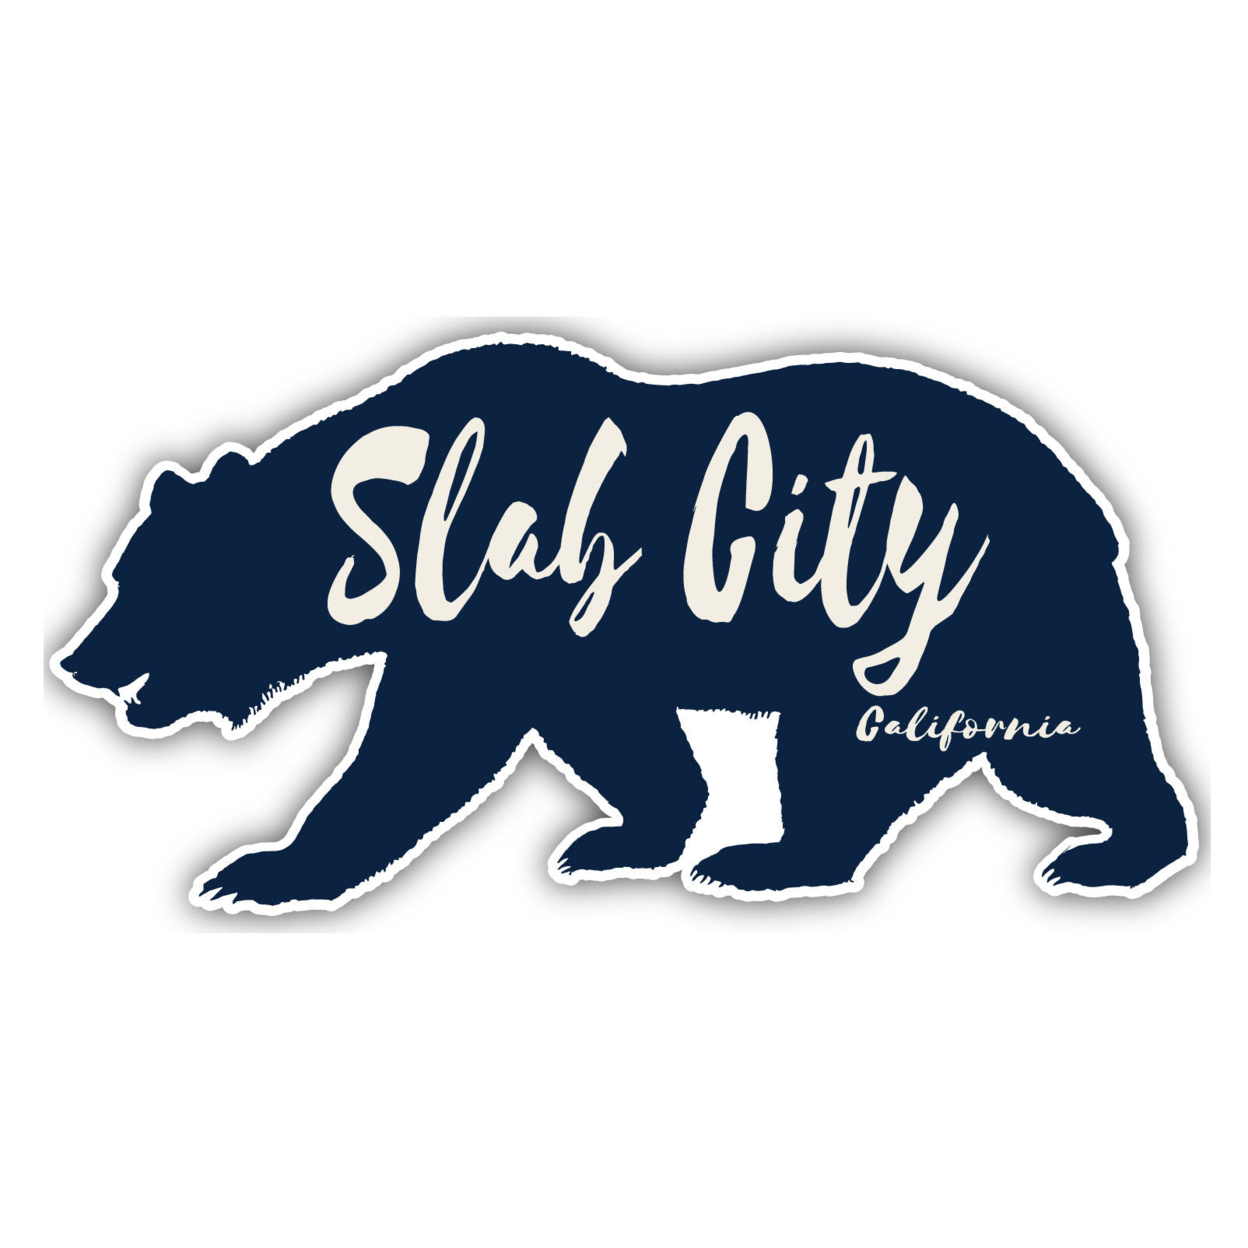 Slab City California Souvenir Decorative Stickers (Choose Theme And Size) - Single Unit, 2-Inch, Tent